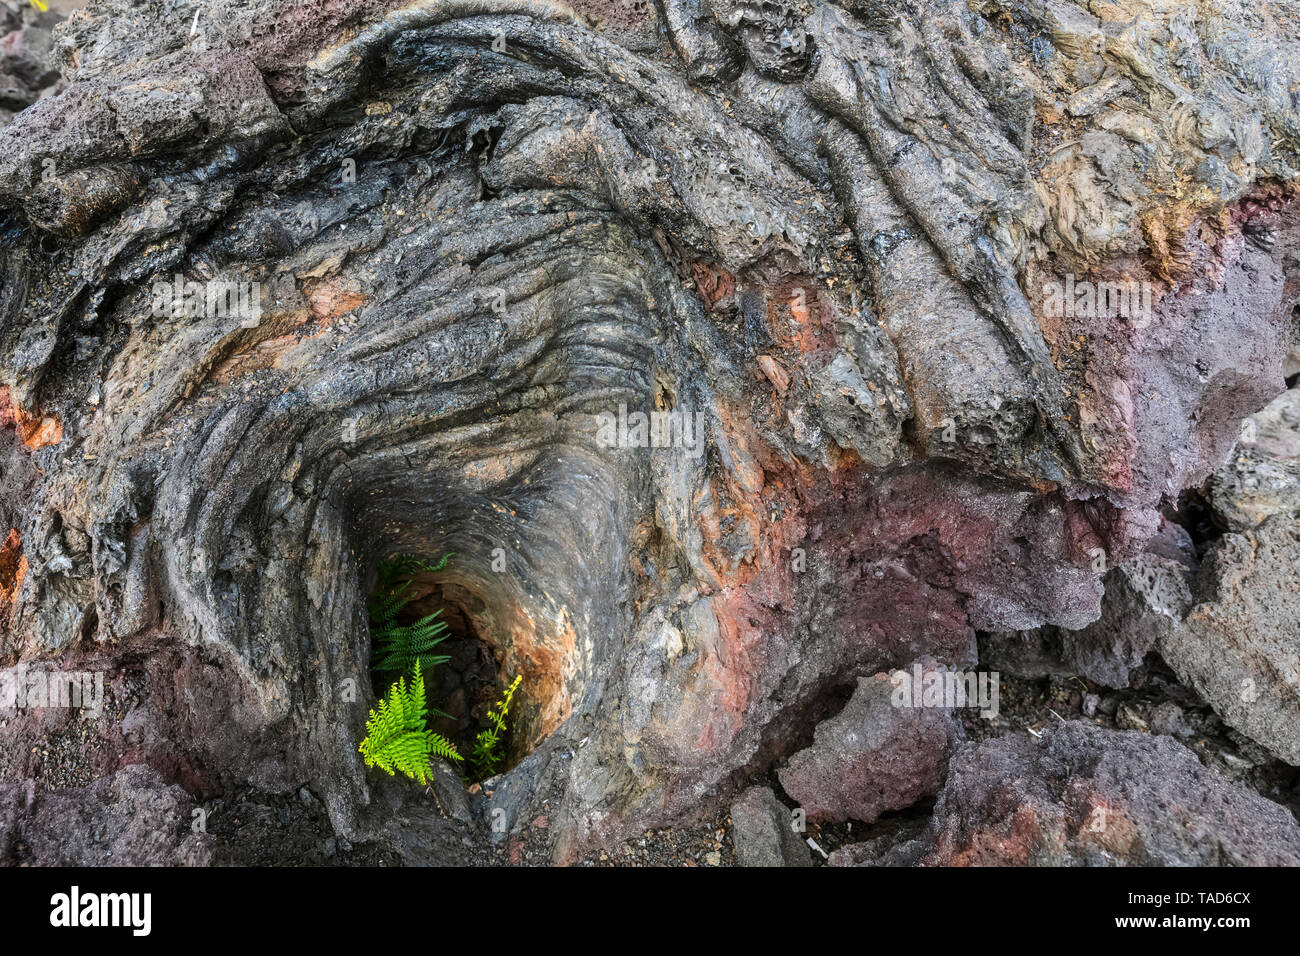 USA, Hawaii, Volcanoes National Park, fern growing on igneous rocks Stock Photo